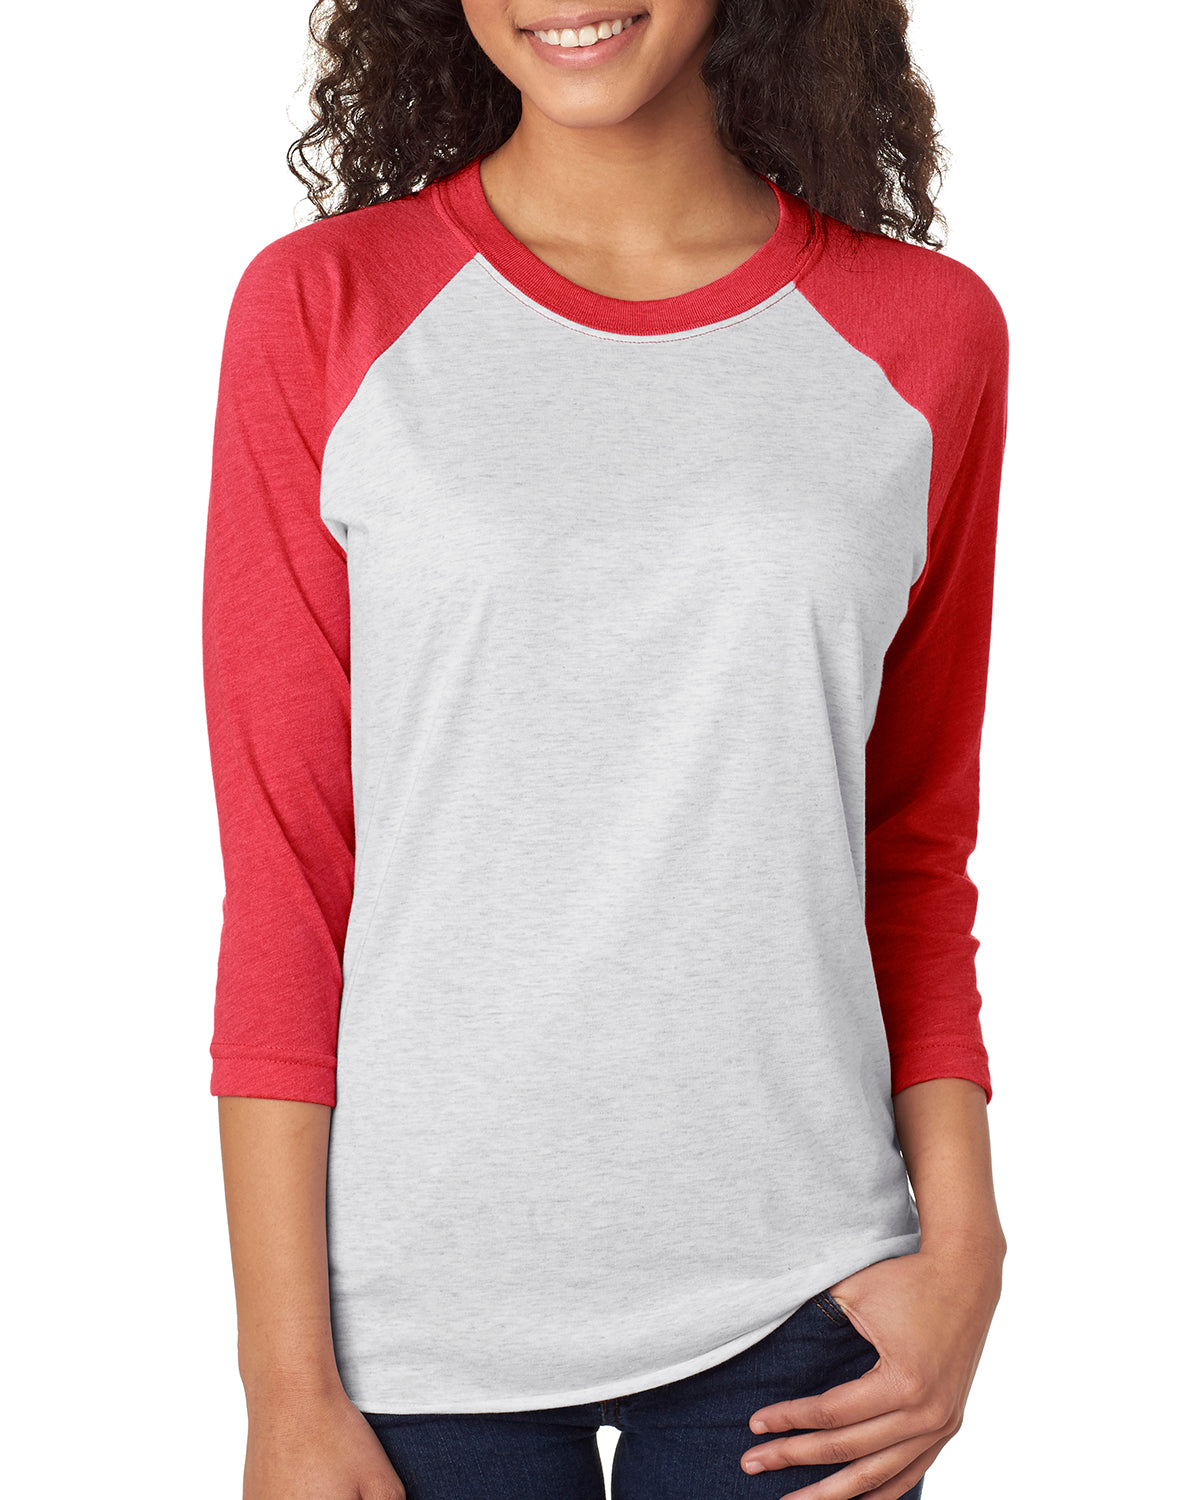 My Favorite Color is Christmas Lights Unisex Baseball/Raglan T-Shirt